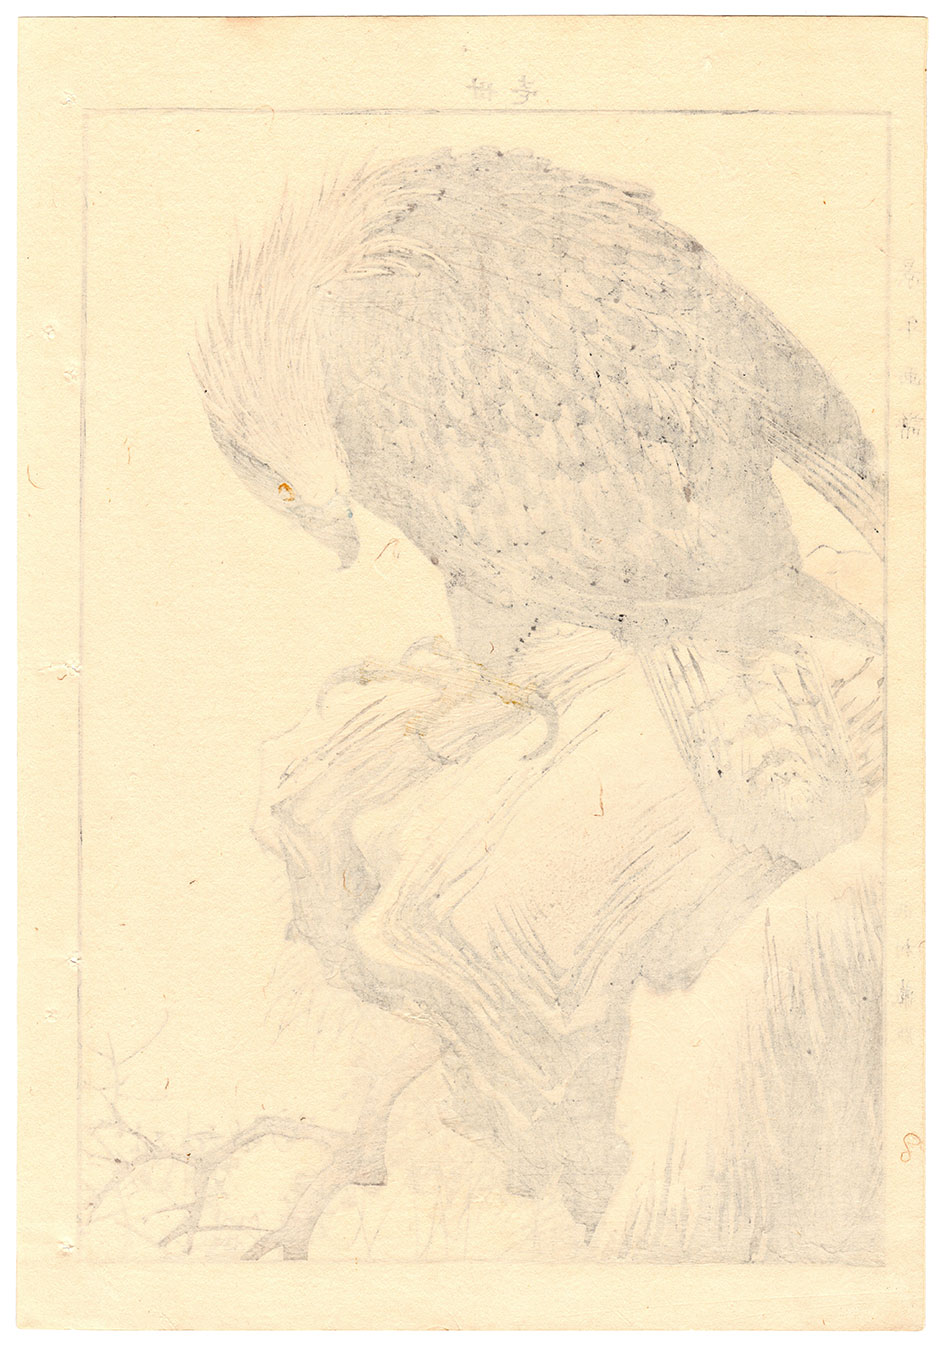 GOLDEN EAGLE (Imao Keinen) – 美和 Miwa Japanese Art